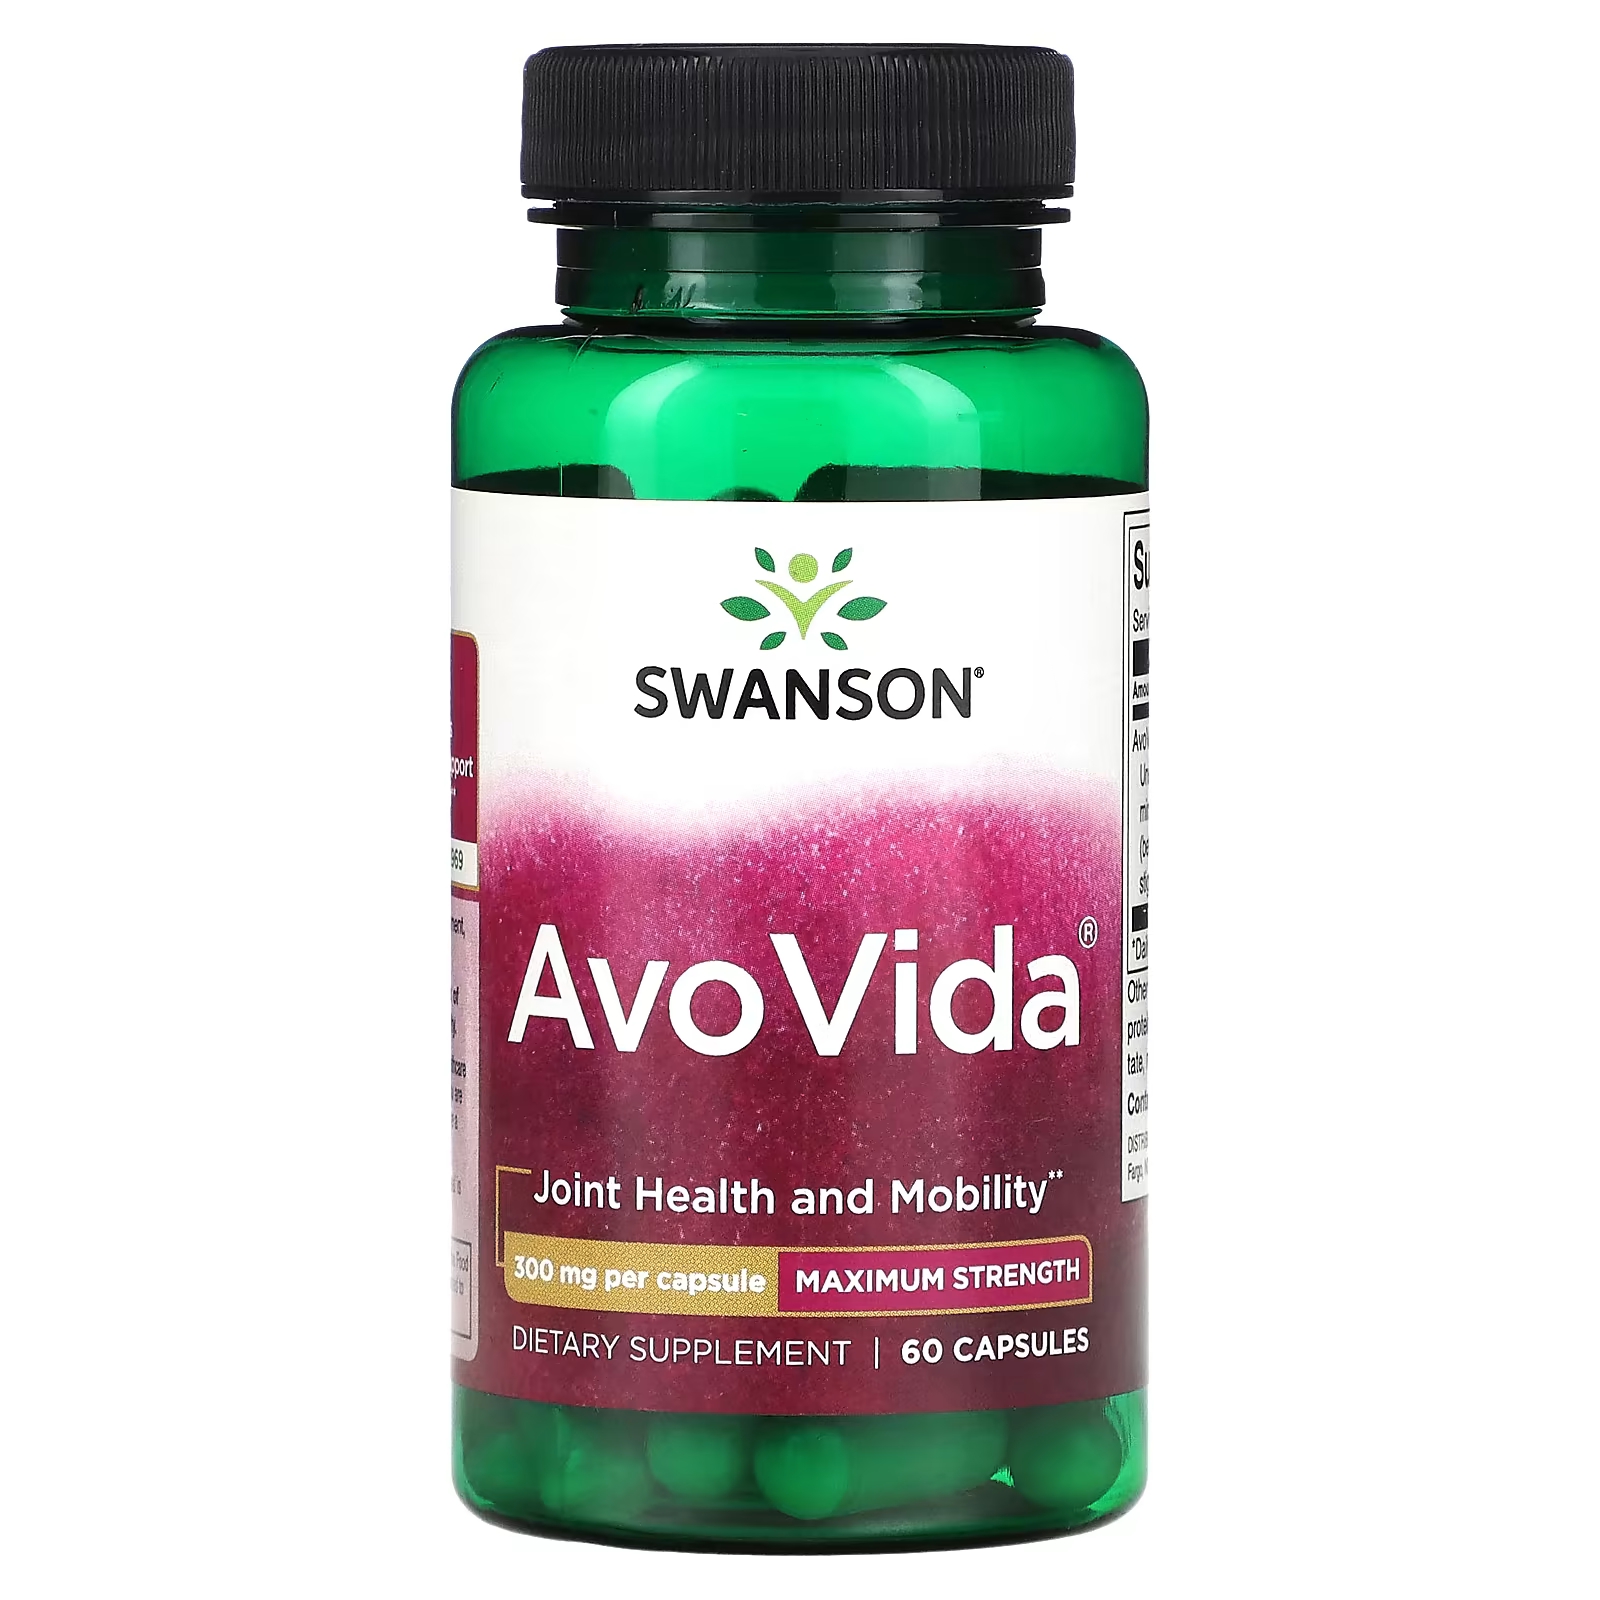 Пищевая добавка Swanson AvoVida максимальная сила, 60 капсул swanson avovida максимальная эффективность 300 мг 60 капсул